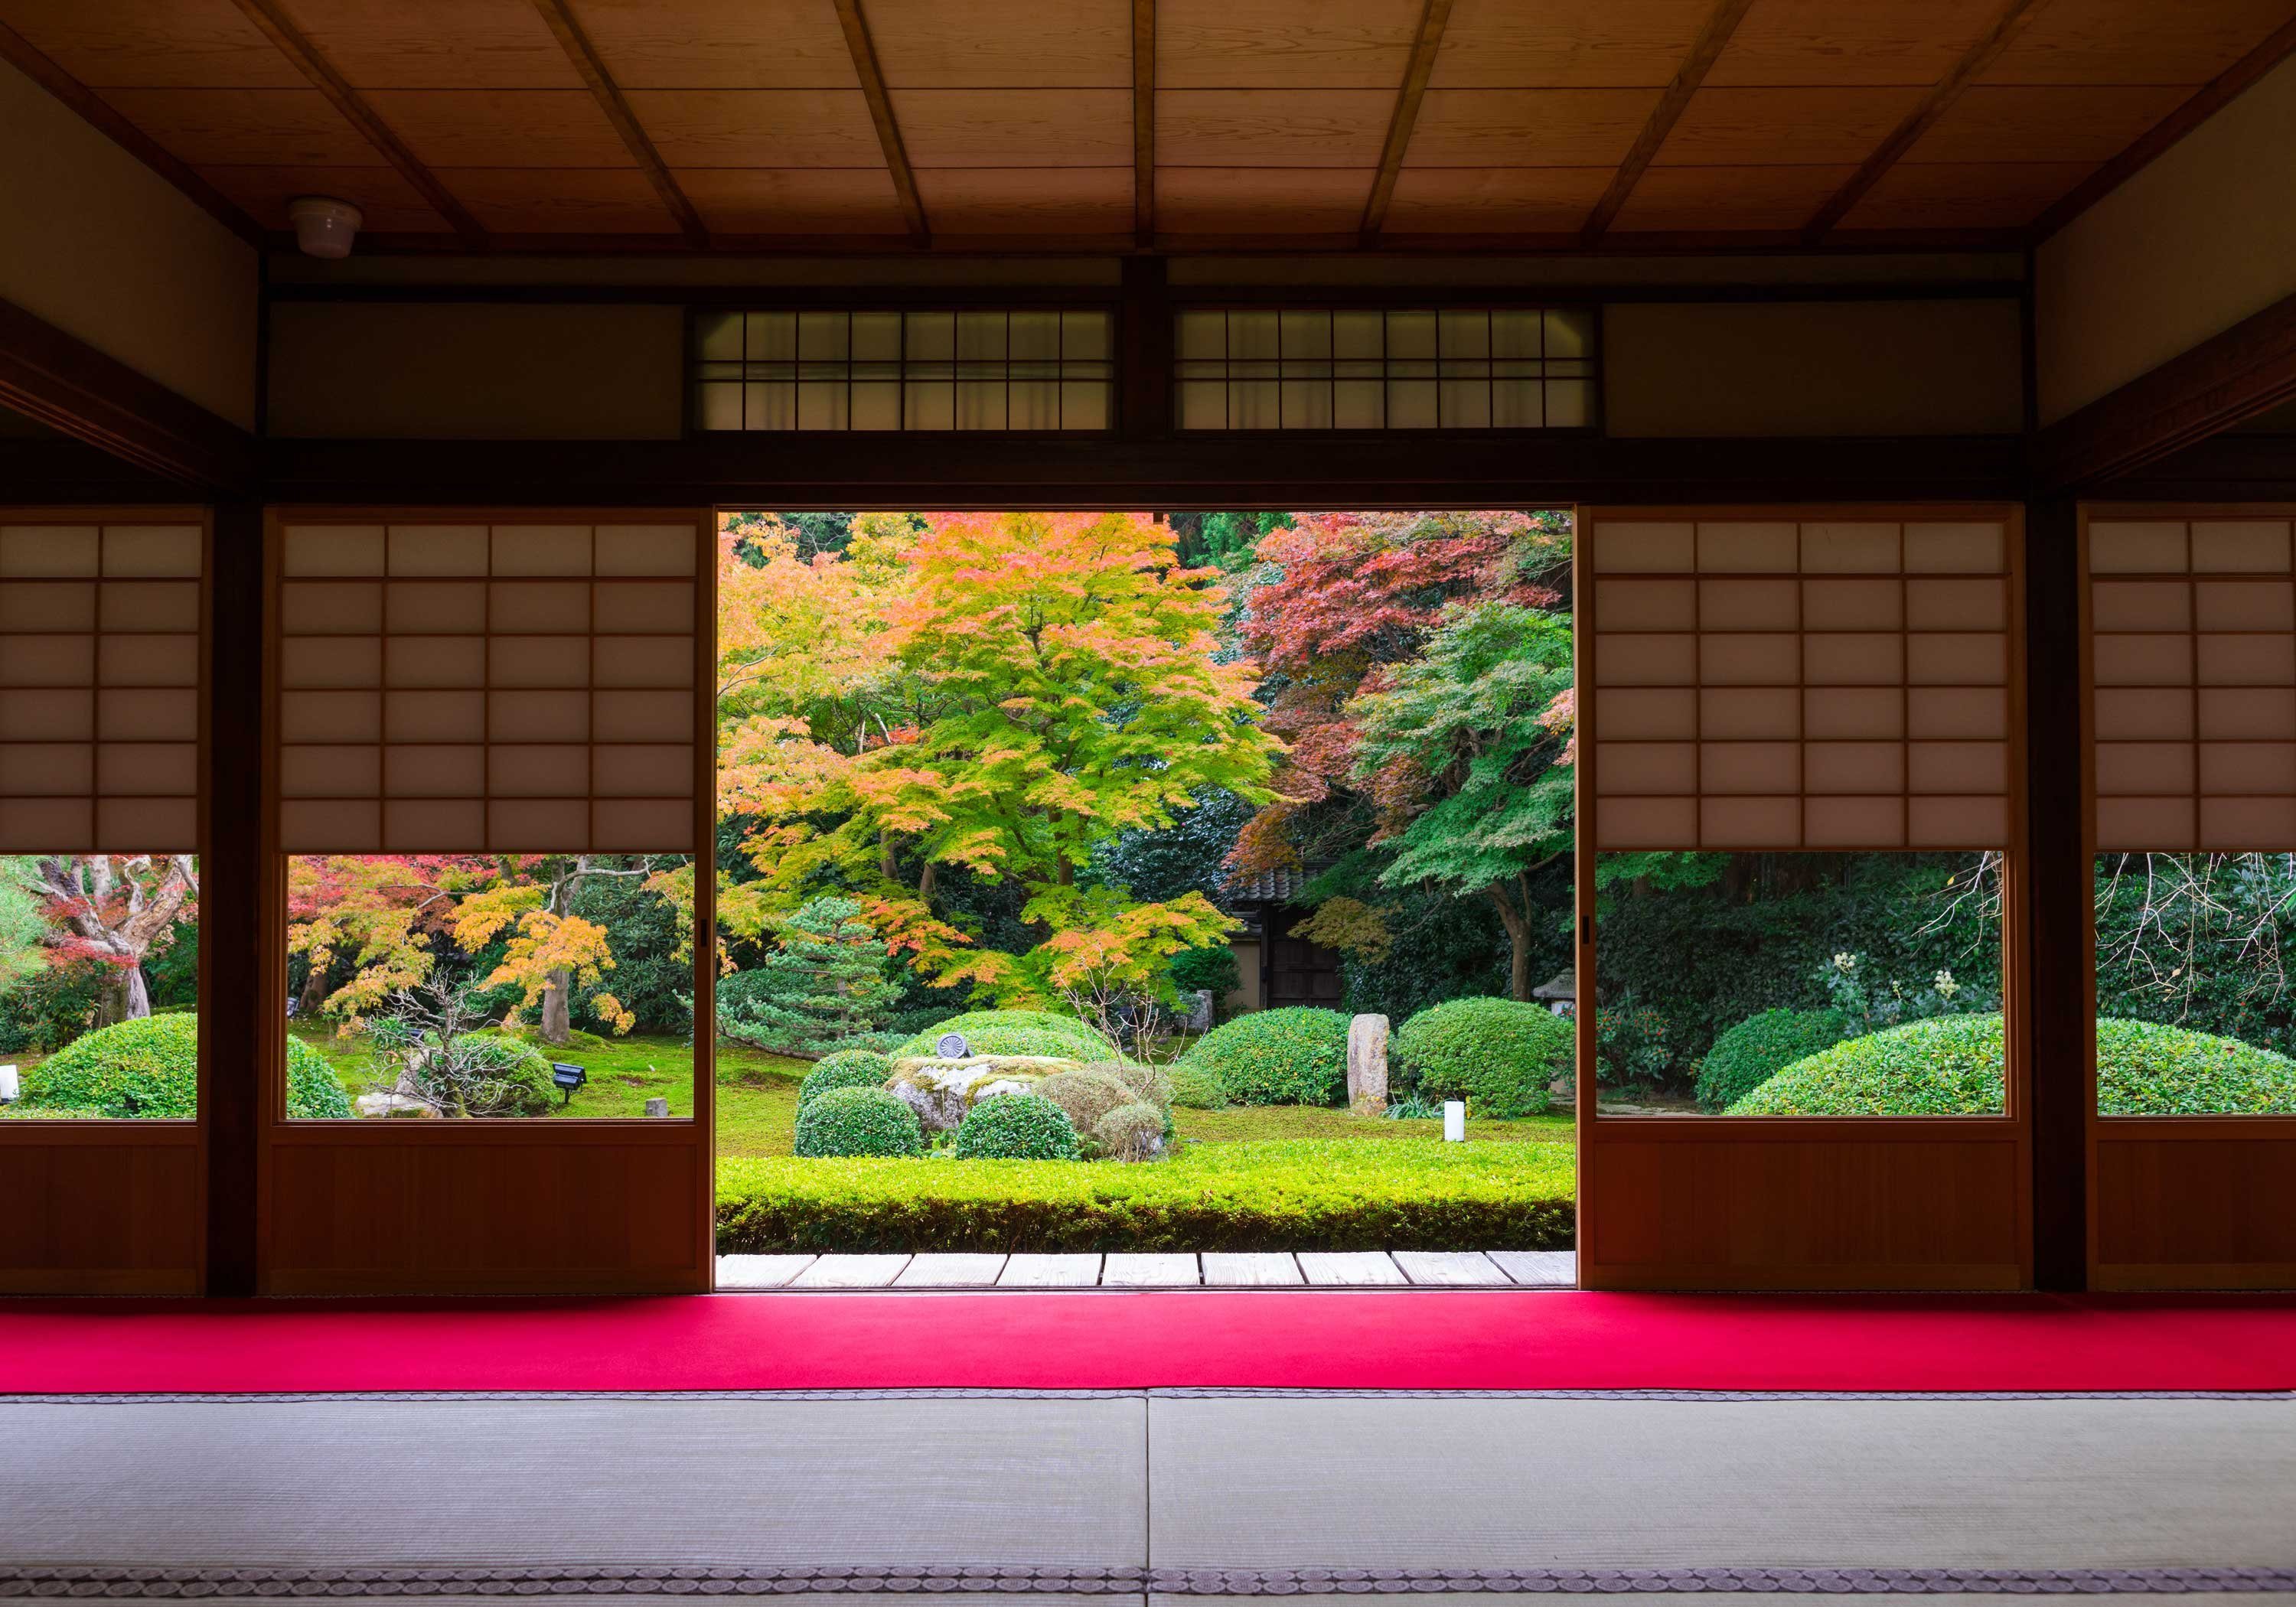 wandmotiv24 Fototapete Japanische Architektur Garten, glatt, Wandtapete, Motivtapete, matt, Vliestapete